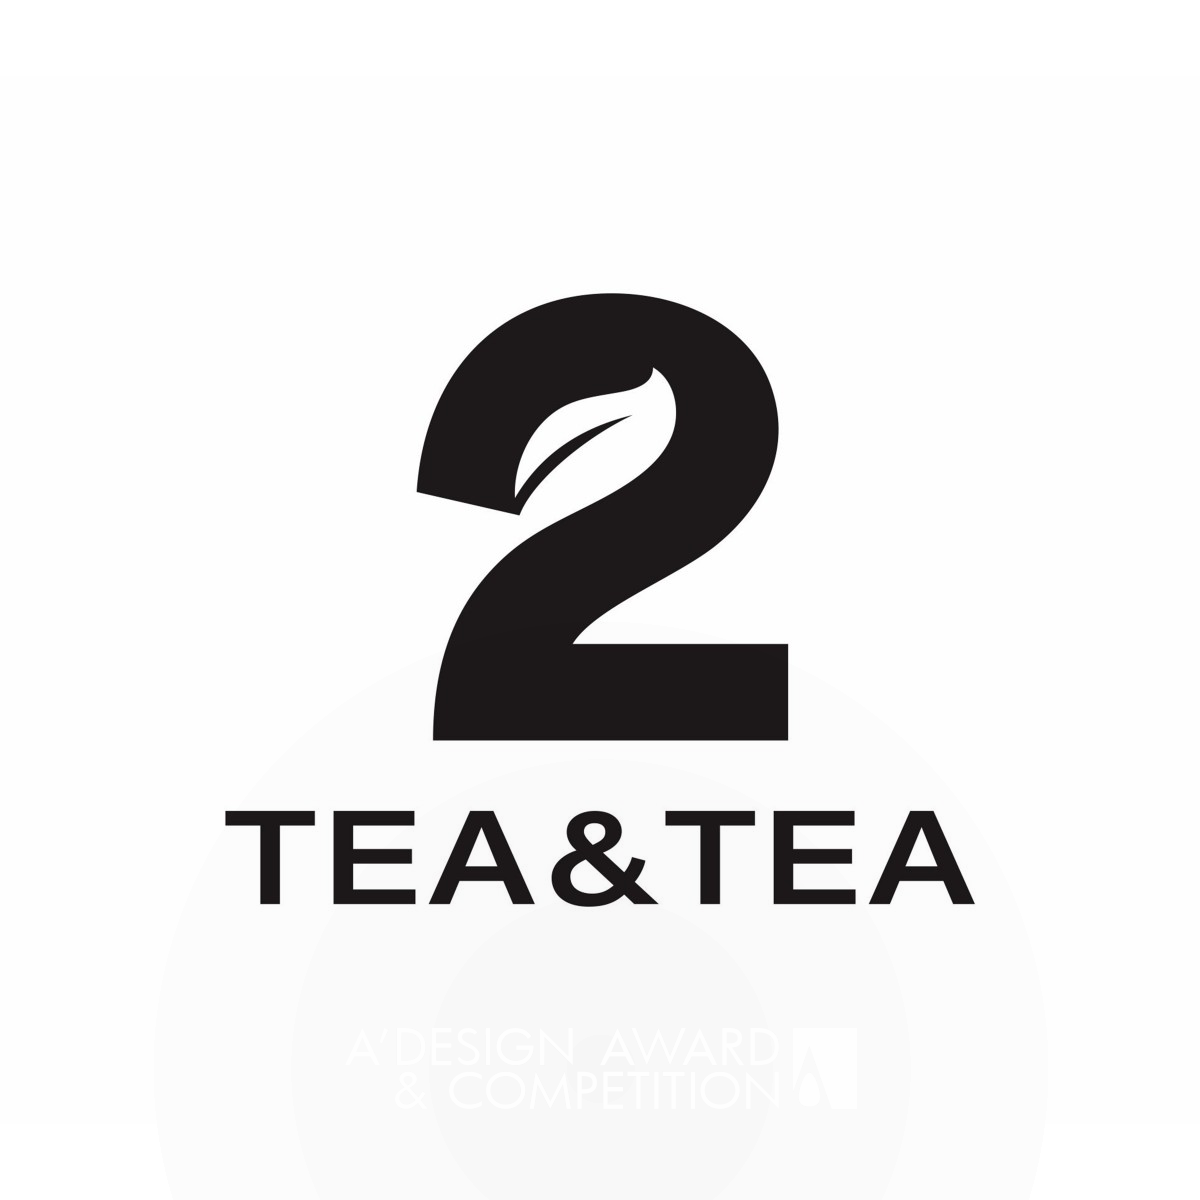 Tea and Tea